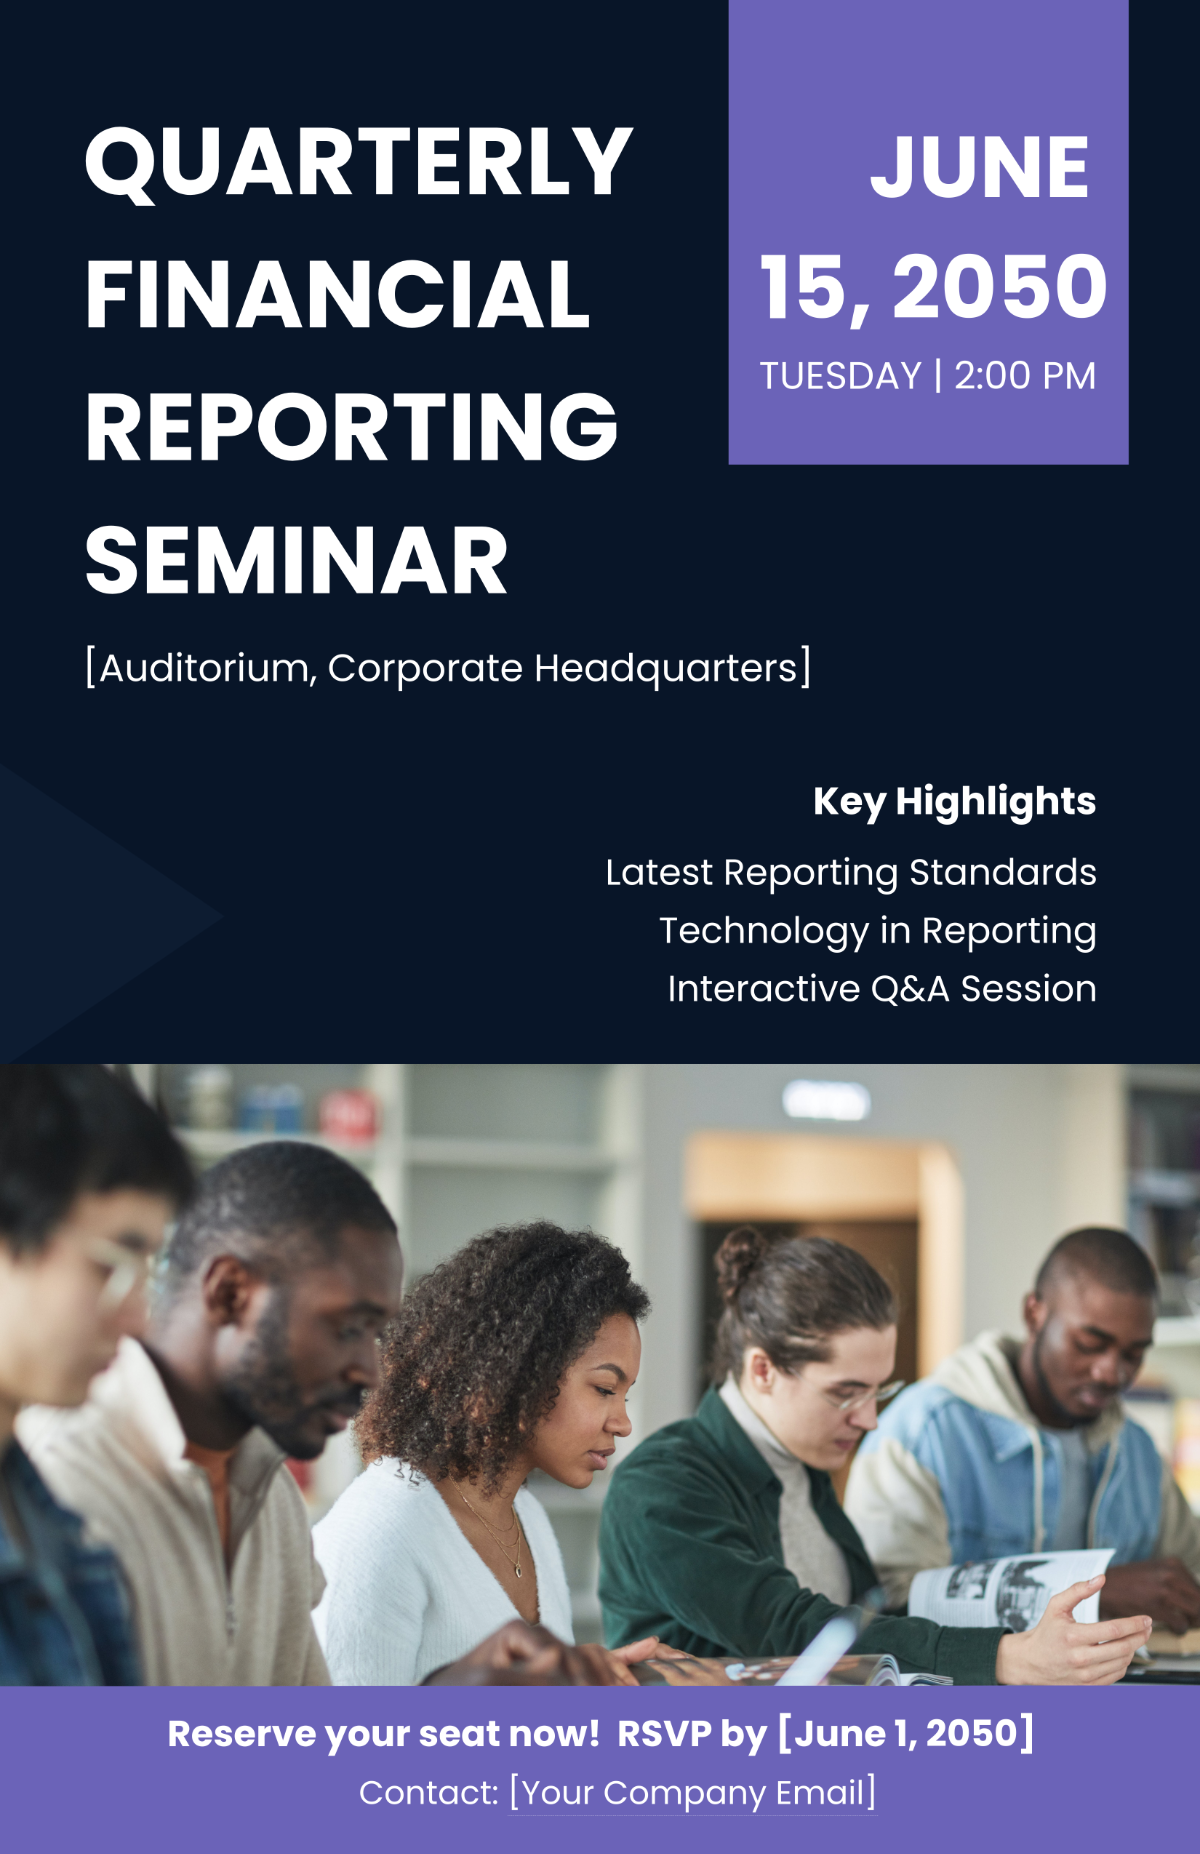 Quarterly Financial Reporting Seminar Poster